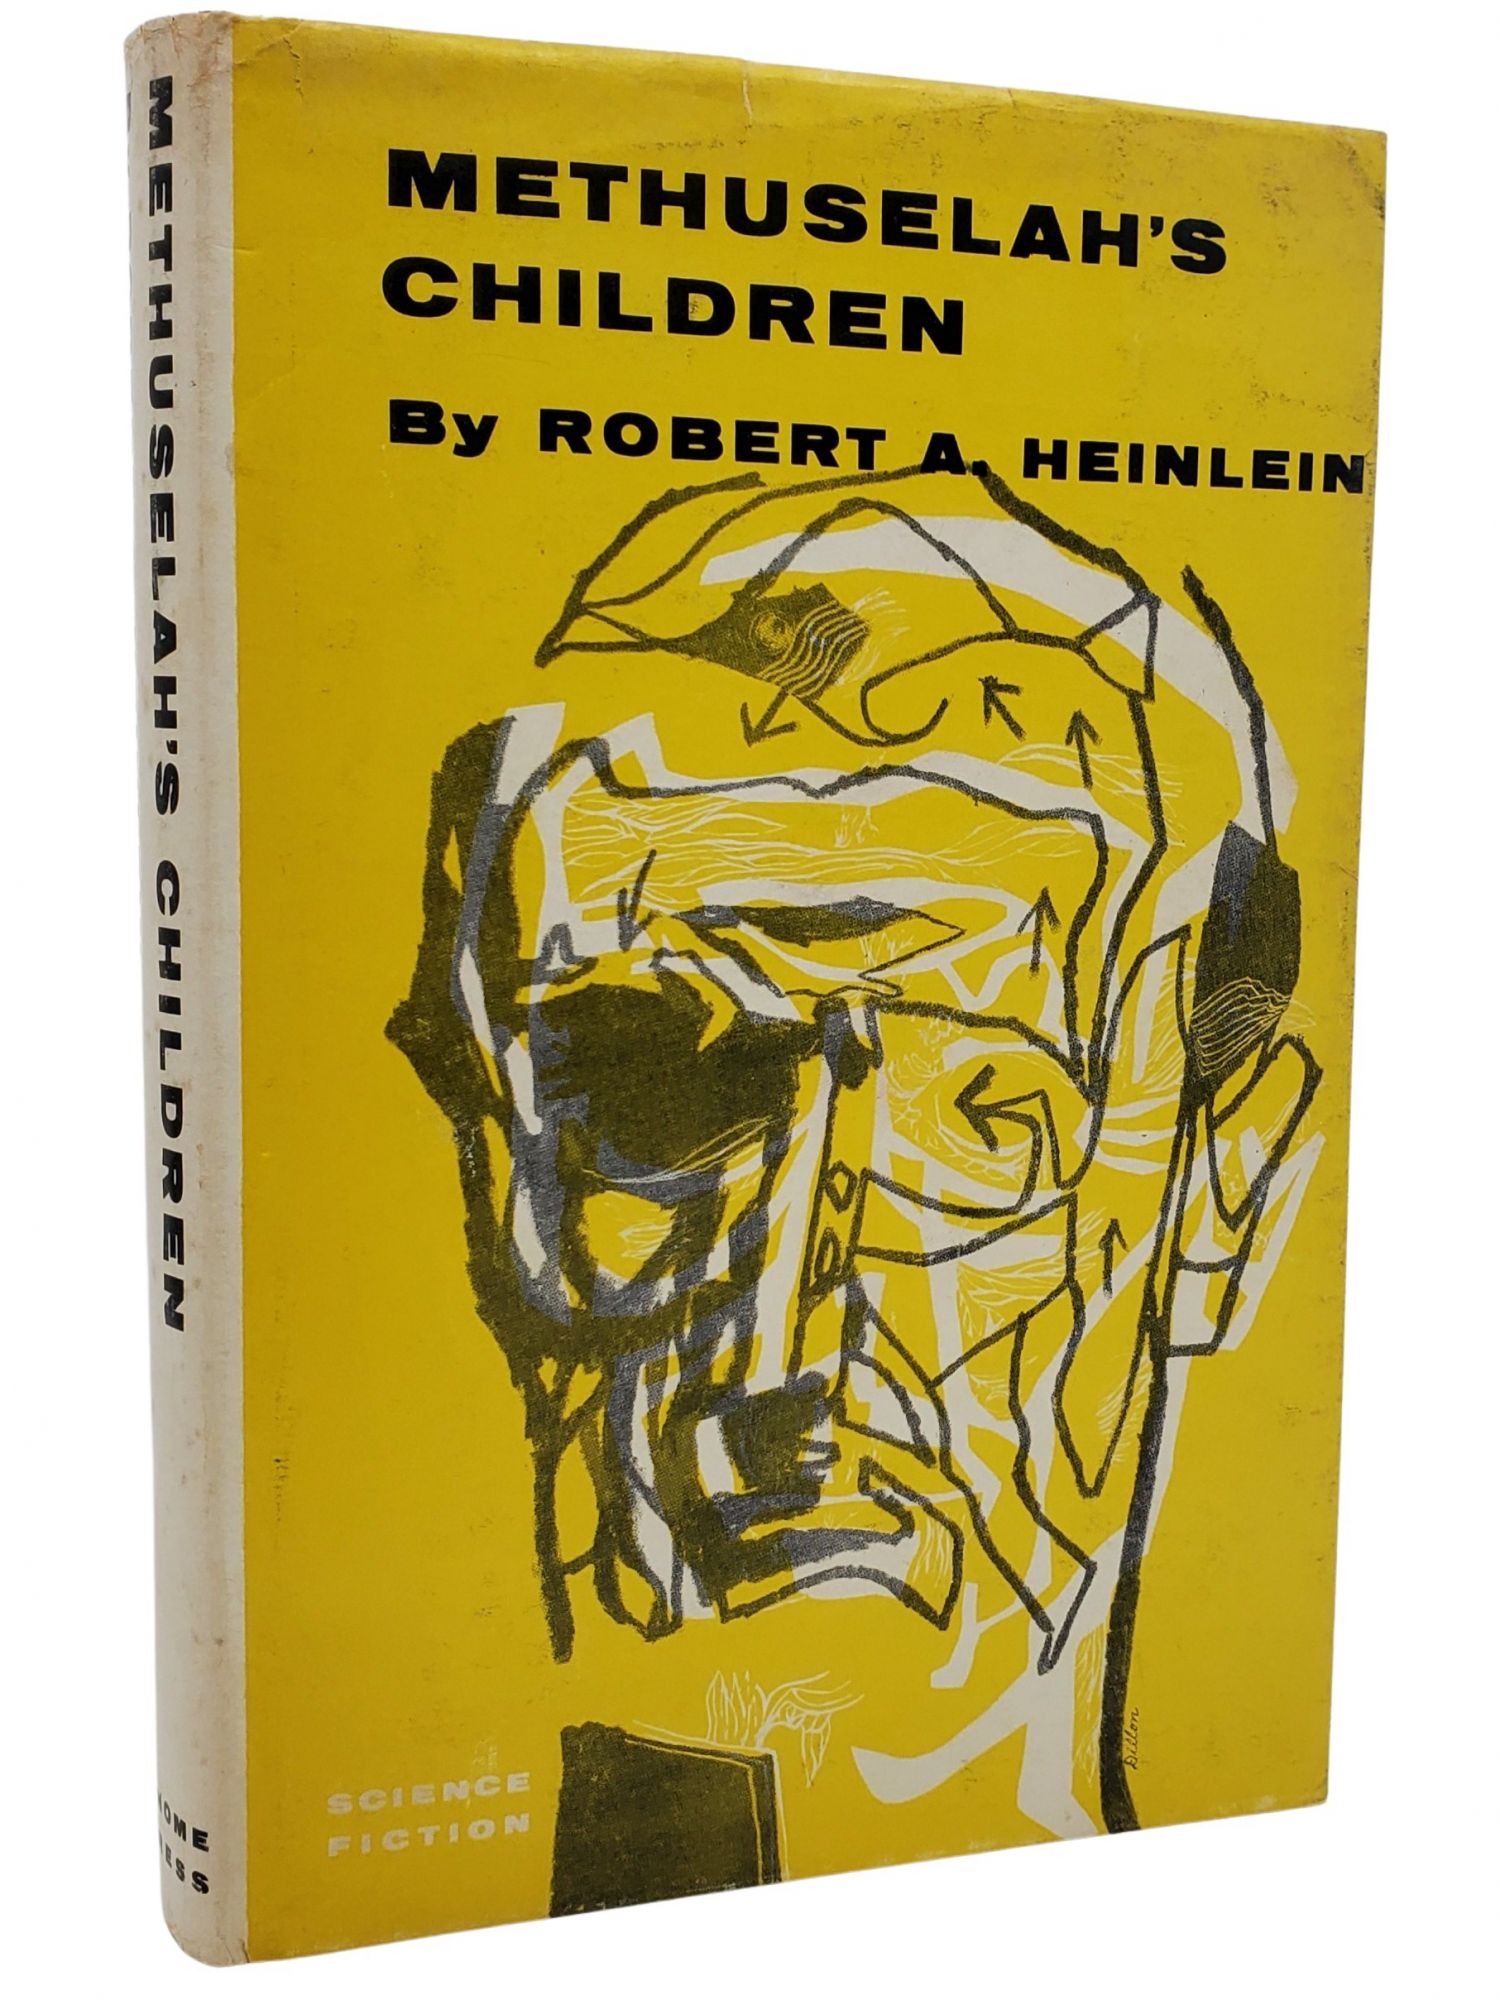 [Book #50602] METHUSELAH'S CHILDREN. Robert A. Heinlein.